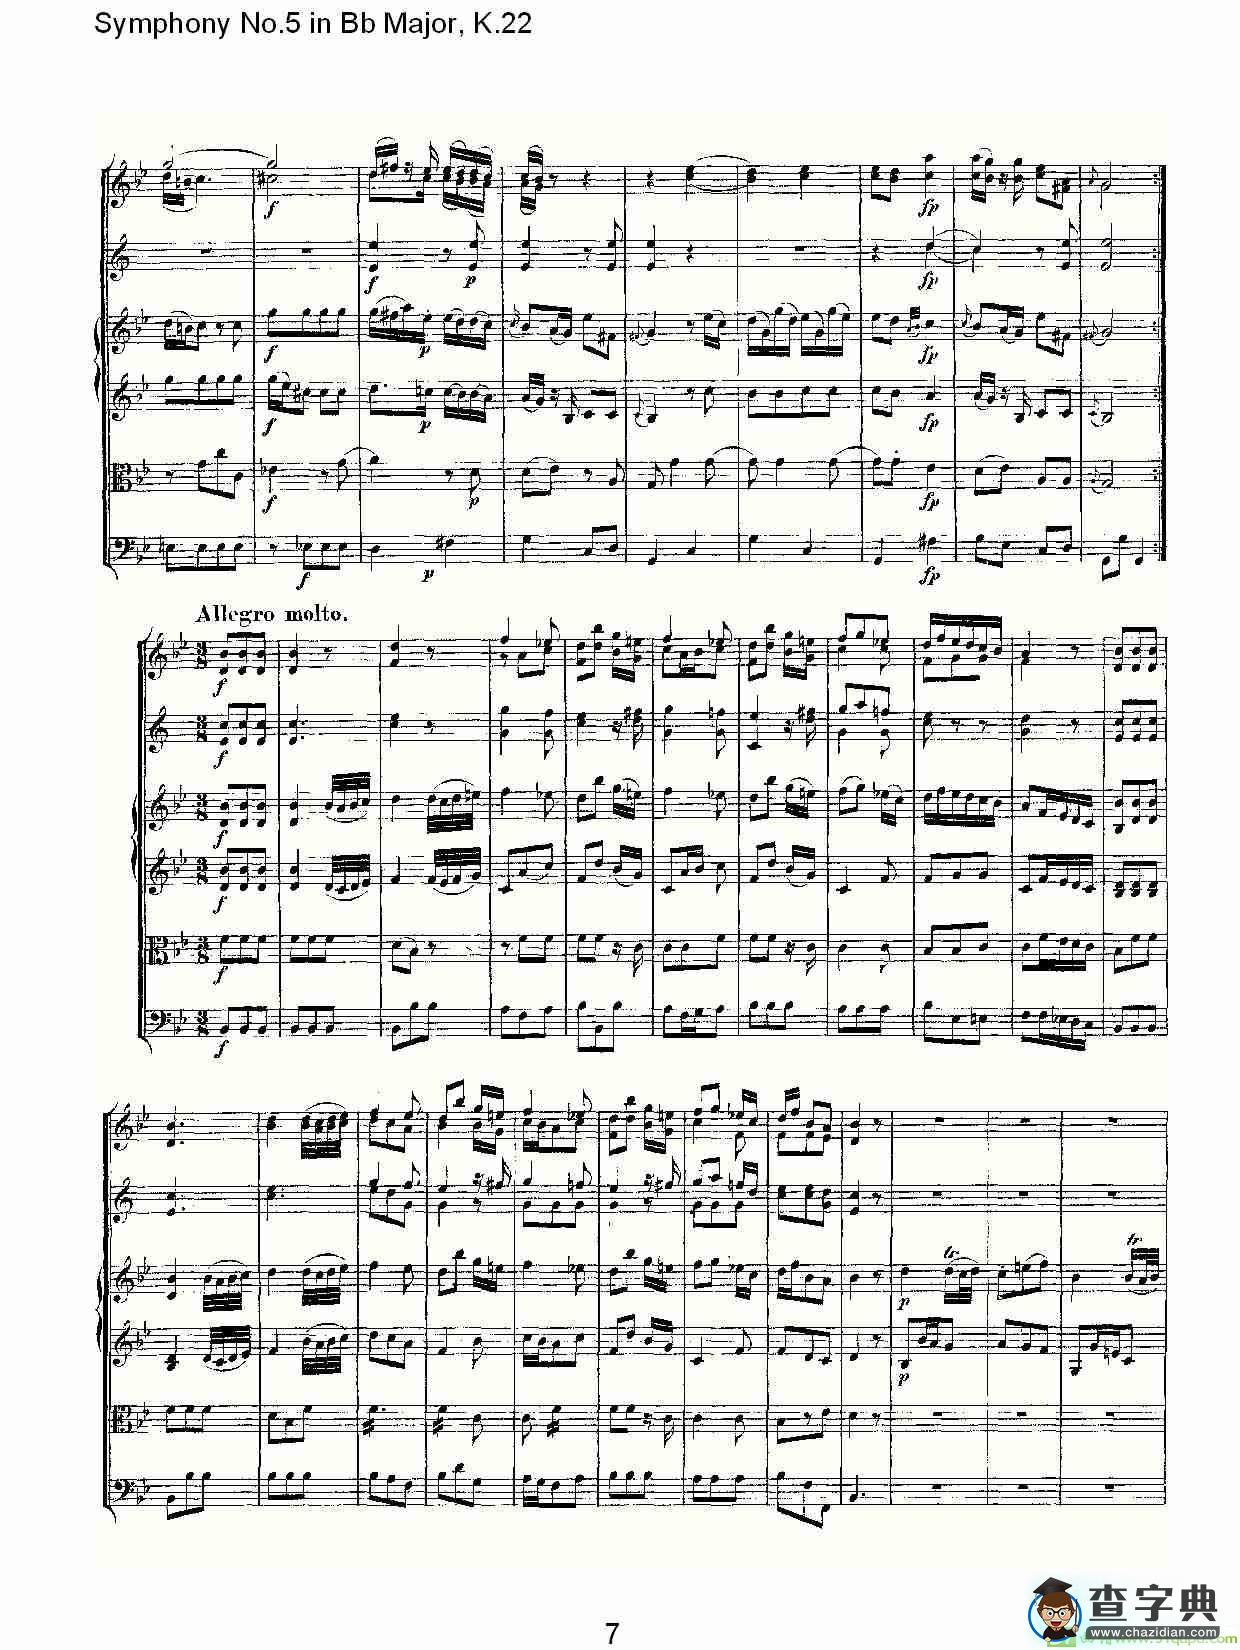 Symphony No.5 in Bb Major, K.22简谱